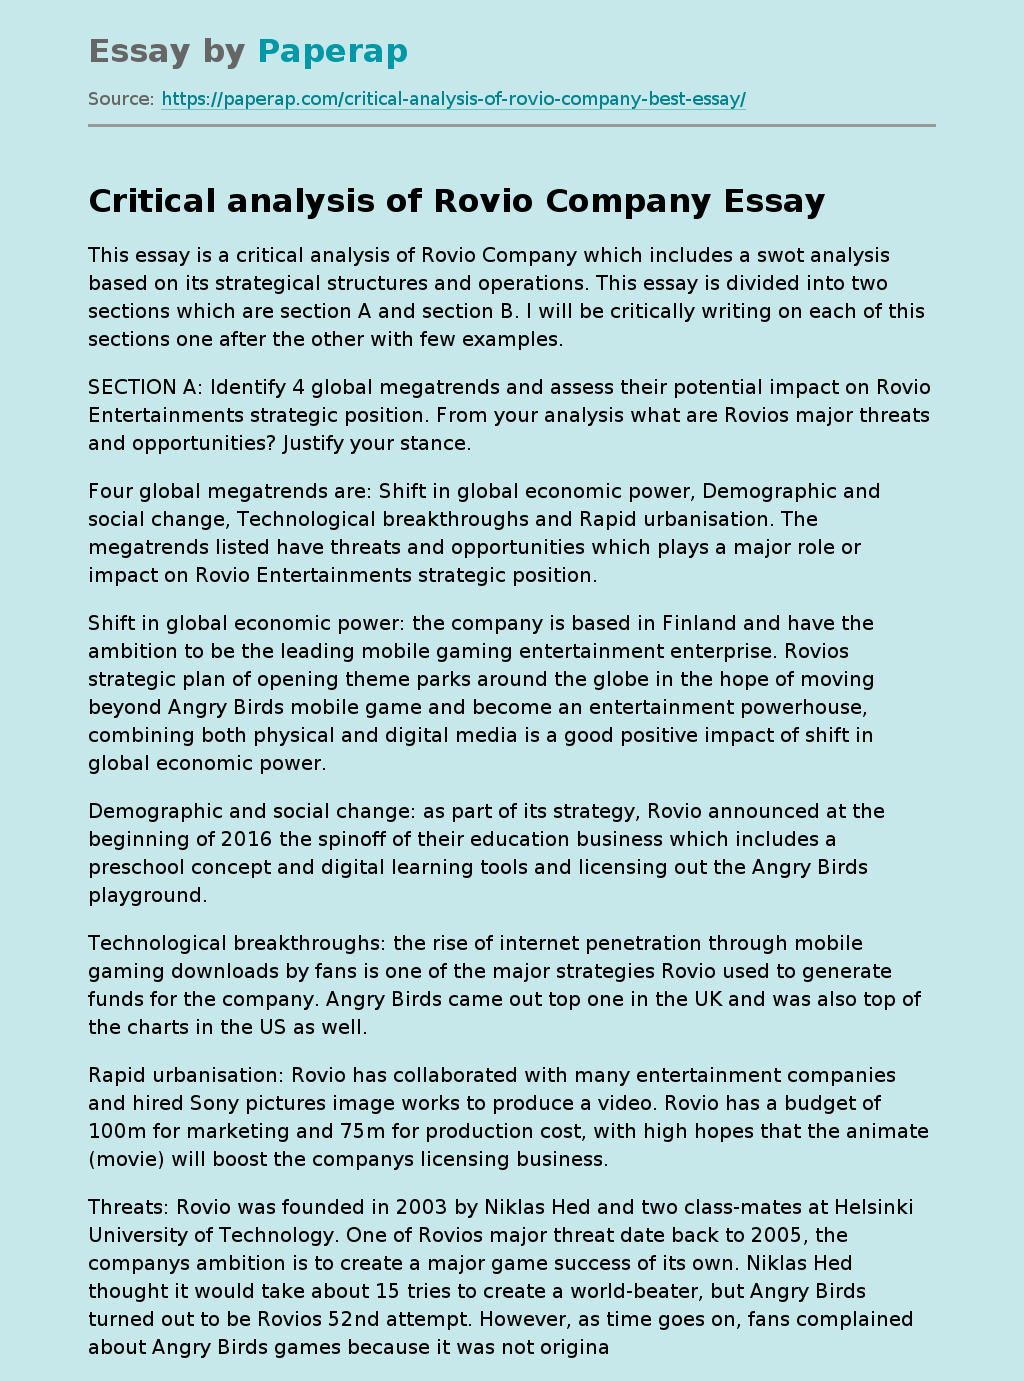 Critical analysis of Rovio Company